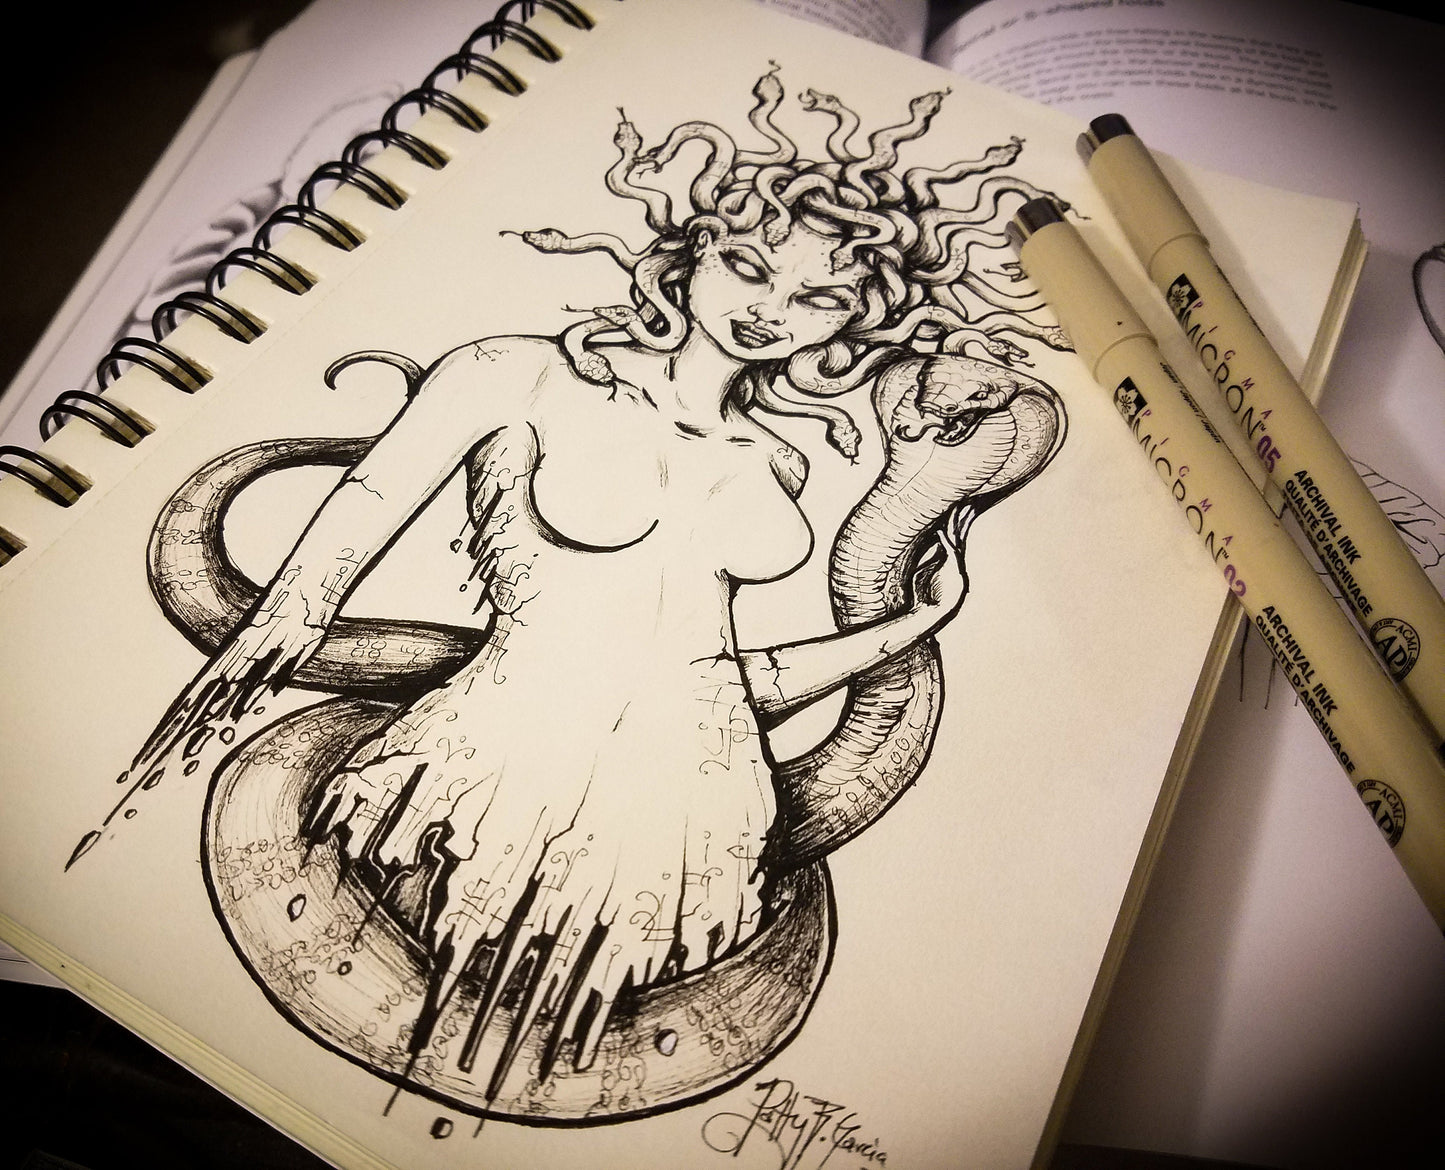 Medusa-Women's Tee-Illustration-Art T-shirt-Women's Clothing-Snake Woman-Gothic Apparel-Mythical Creature-Snakes-Monsters-Greek Art-Gifts